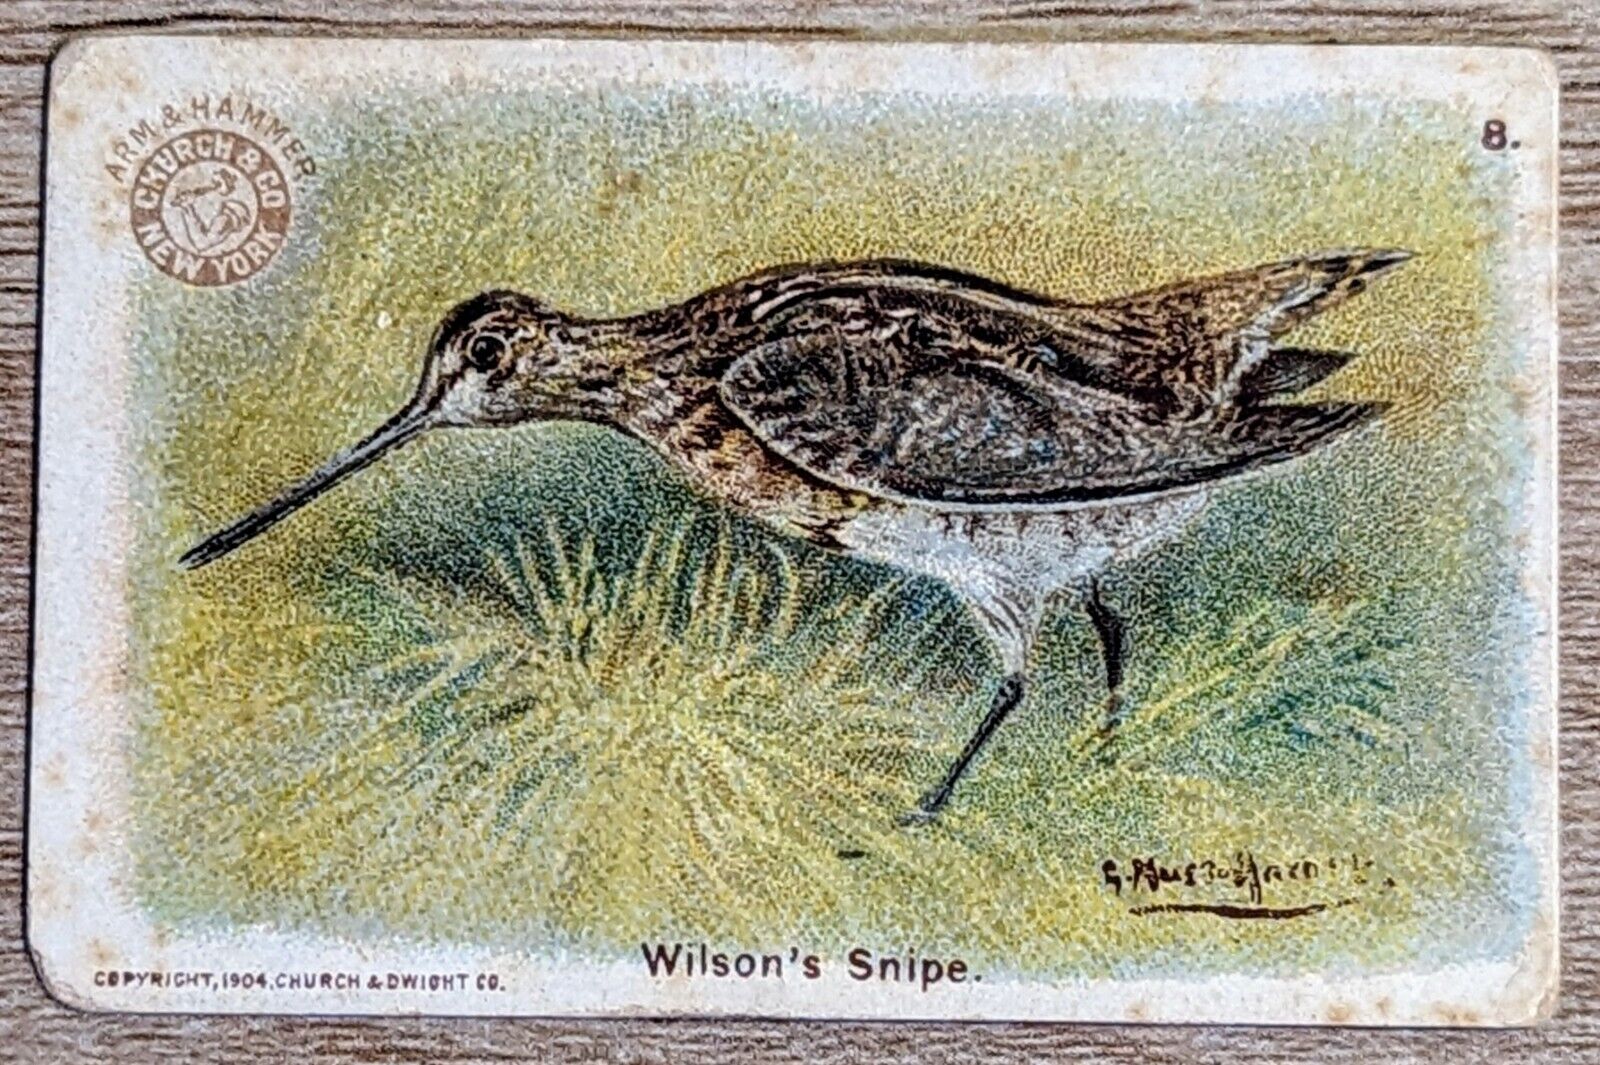 1904 J3a Church & Co Arm & Hammer Game Bird Series Wilson's Snipe SMALL Card #8